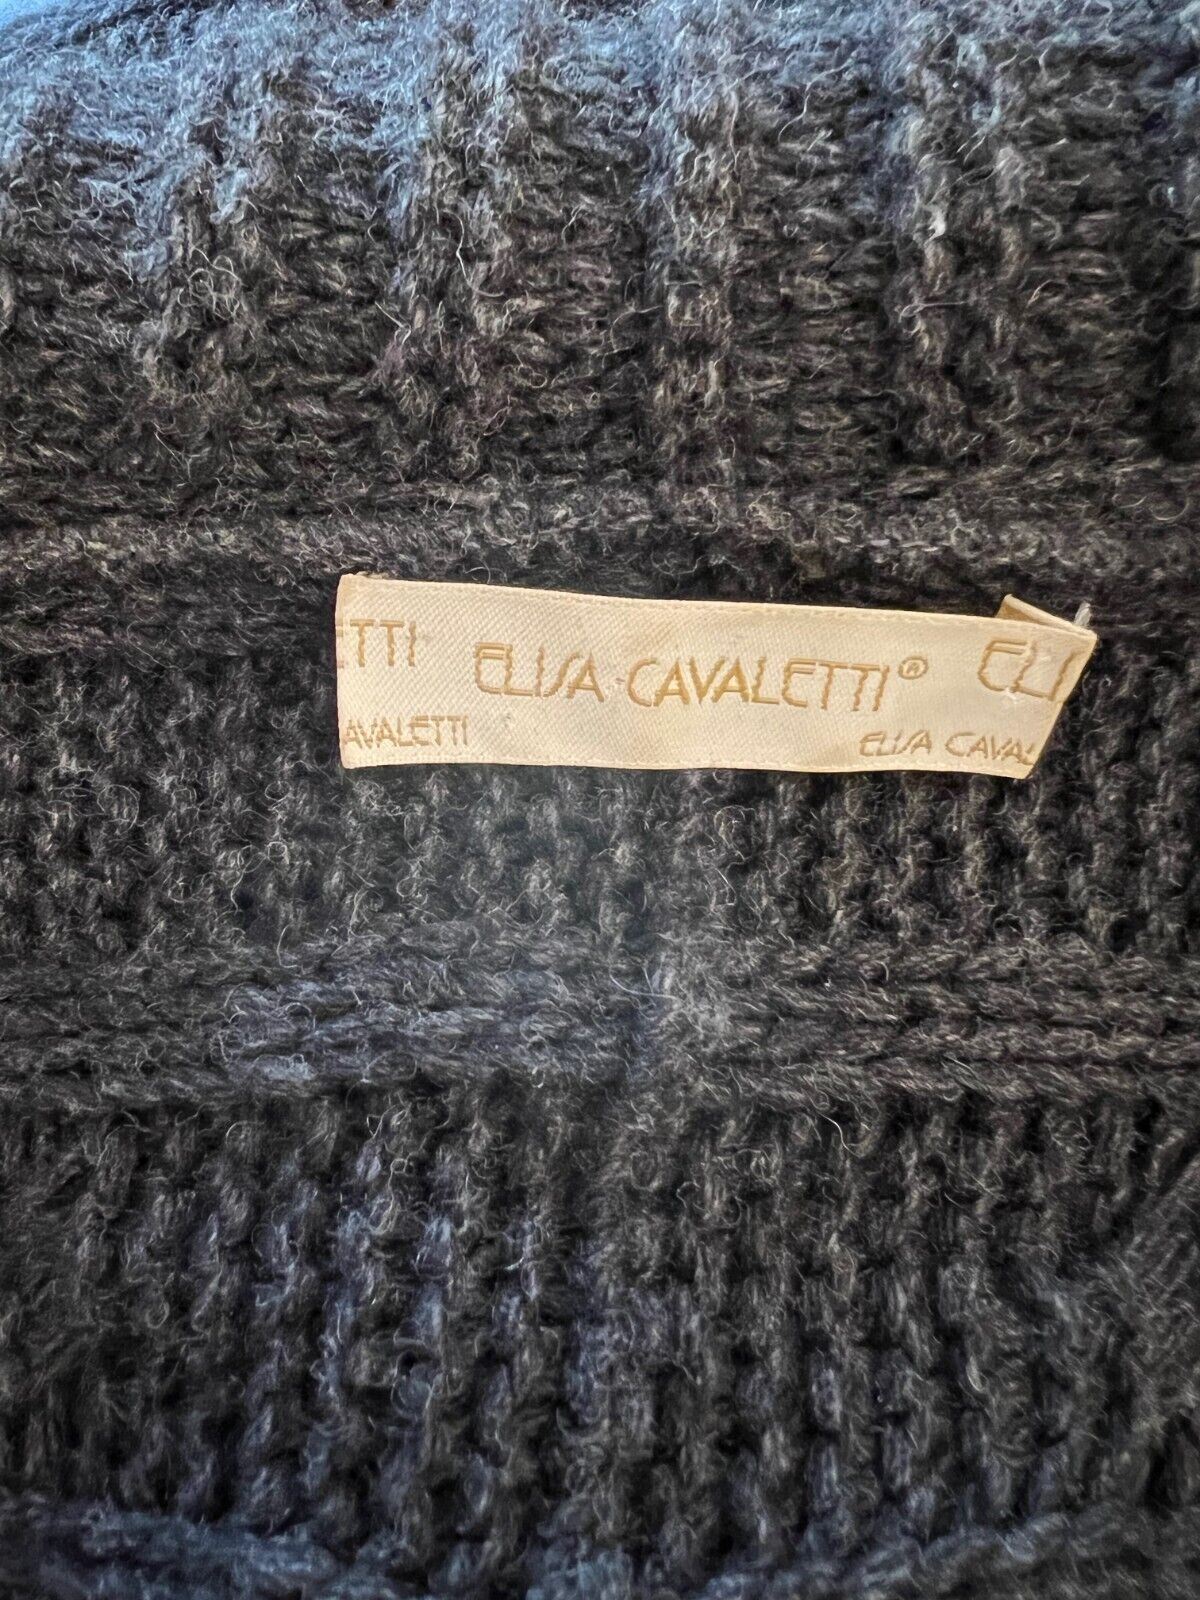 Elisa Cavaletti Charcoal Grey Wool Cable Knit Chunky Cardigan Size M UK 10/12 US 6/8 EU 38/40 Timeless Fashions